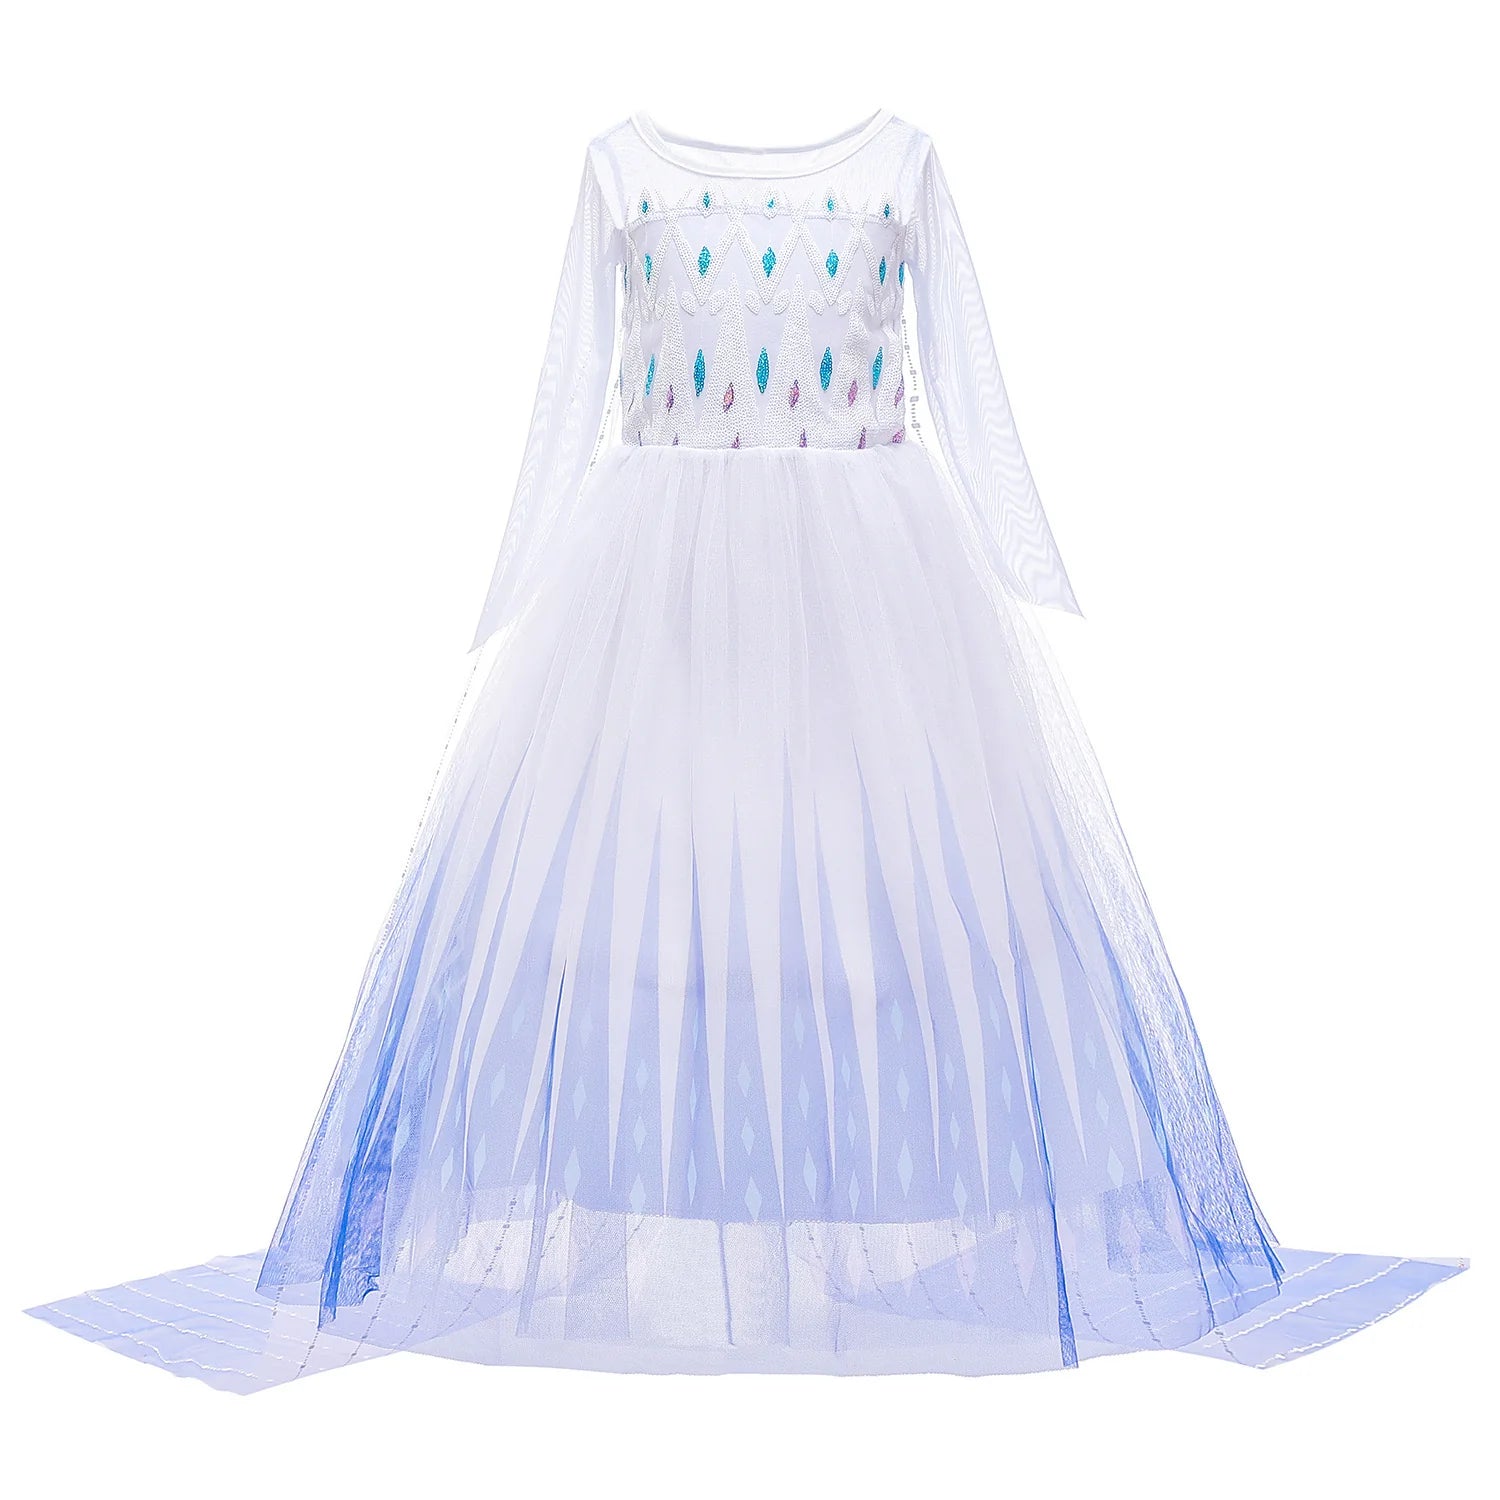 Elegant and Luxurious Frozen Elsa Princess Dresses White With Blue